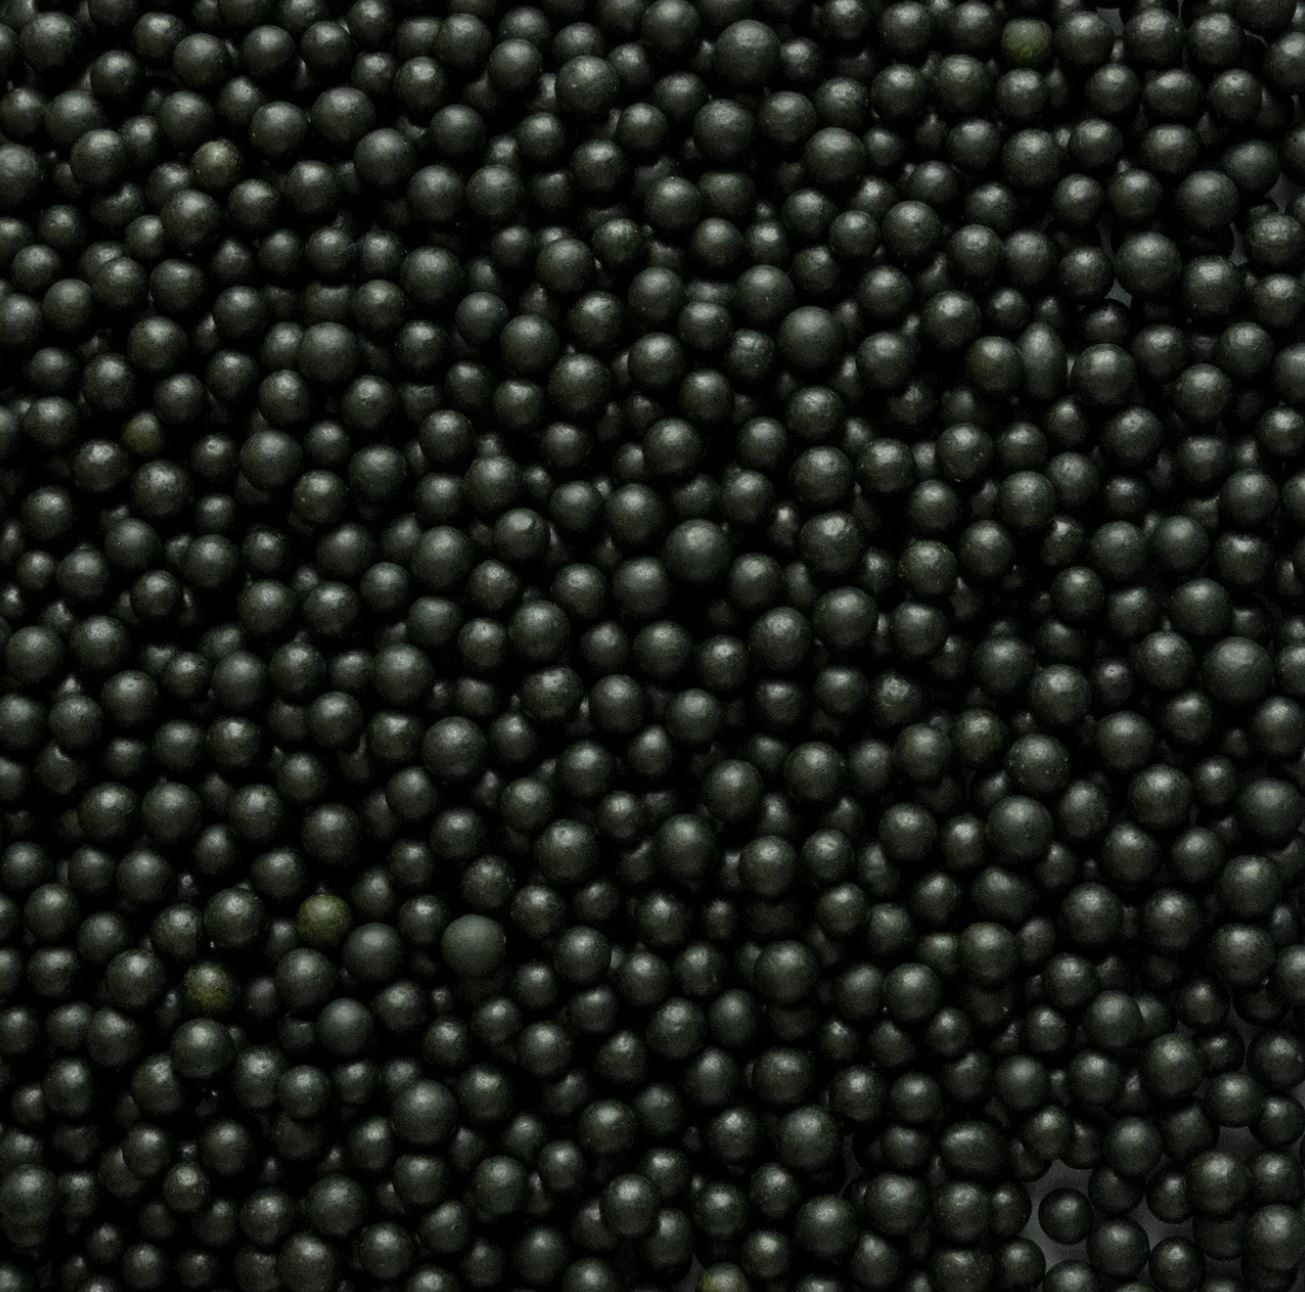 Black Jumbo Nonpareil Beads